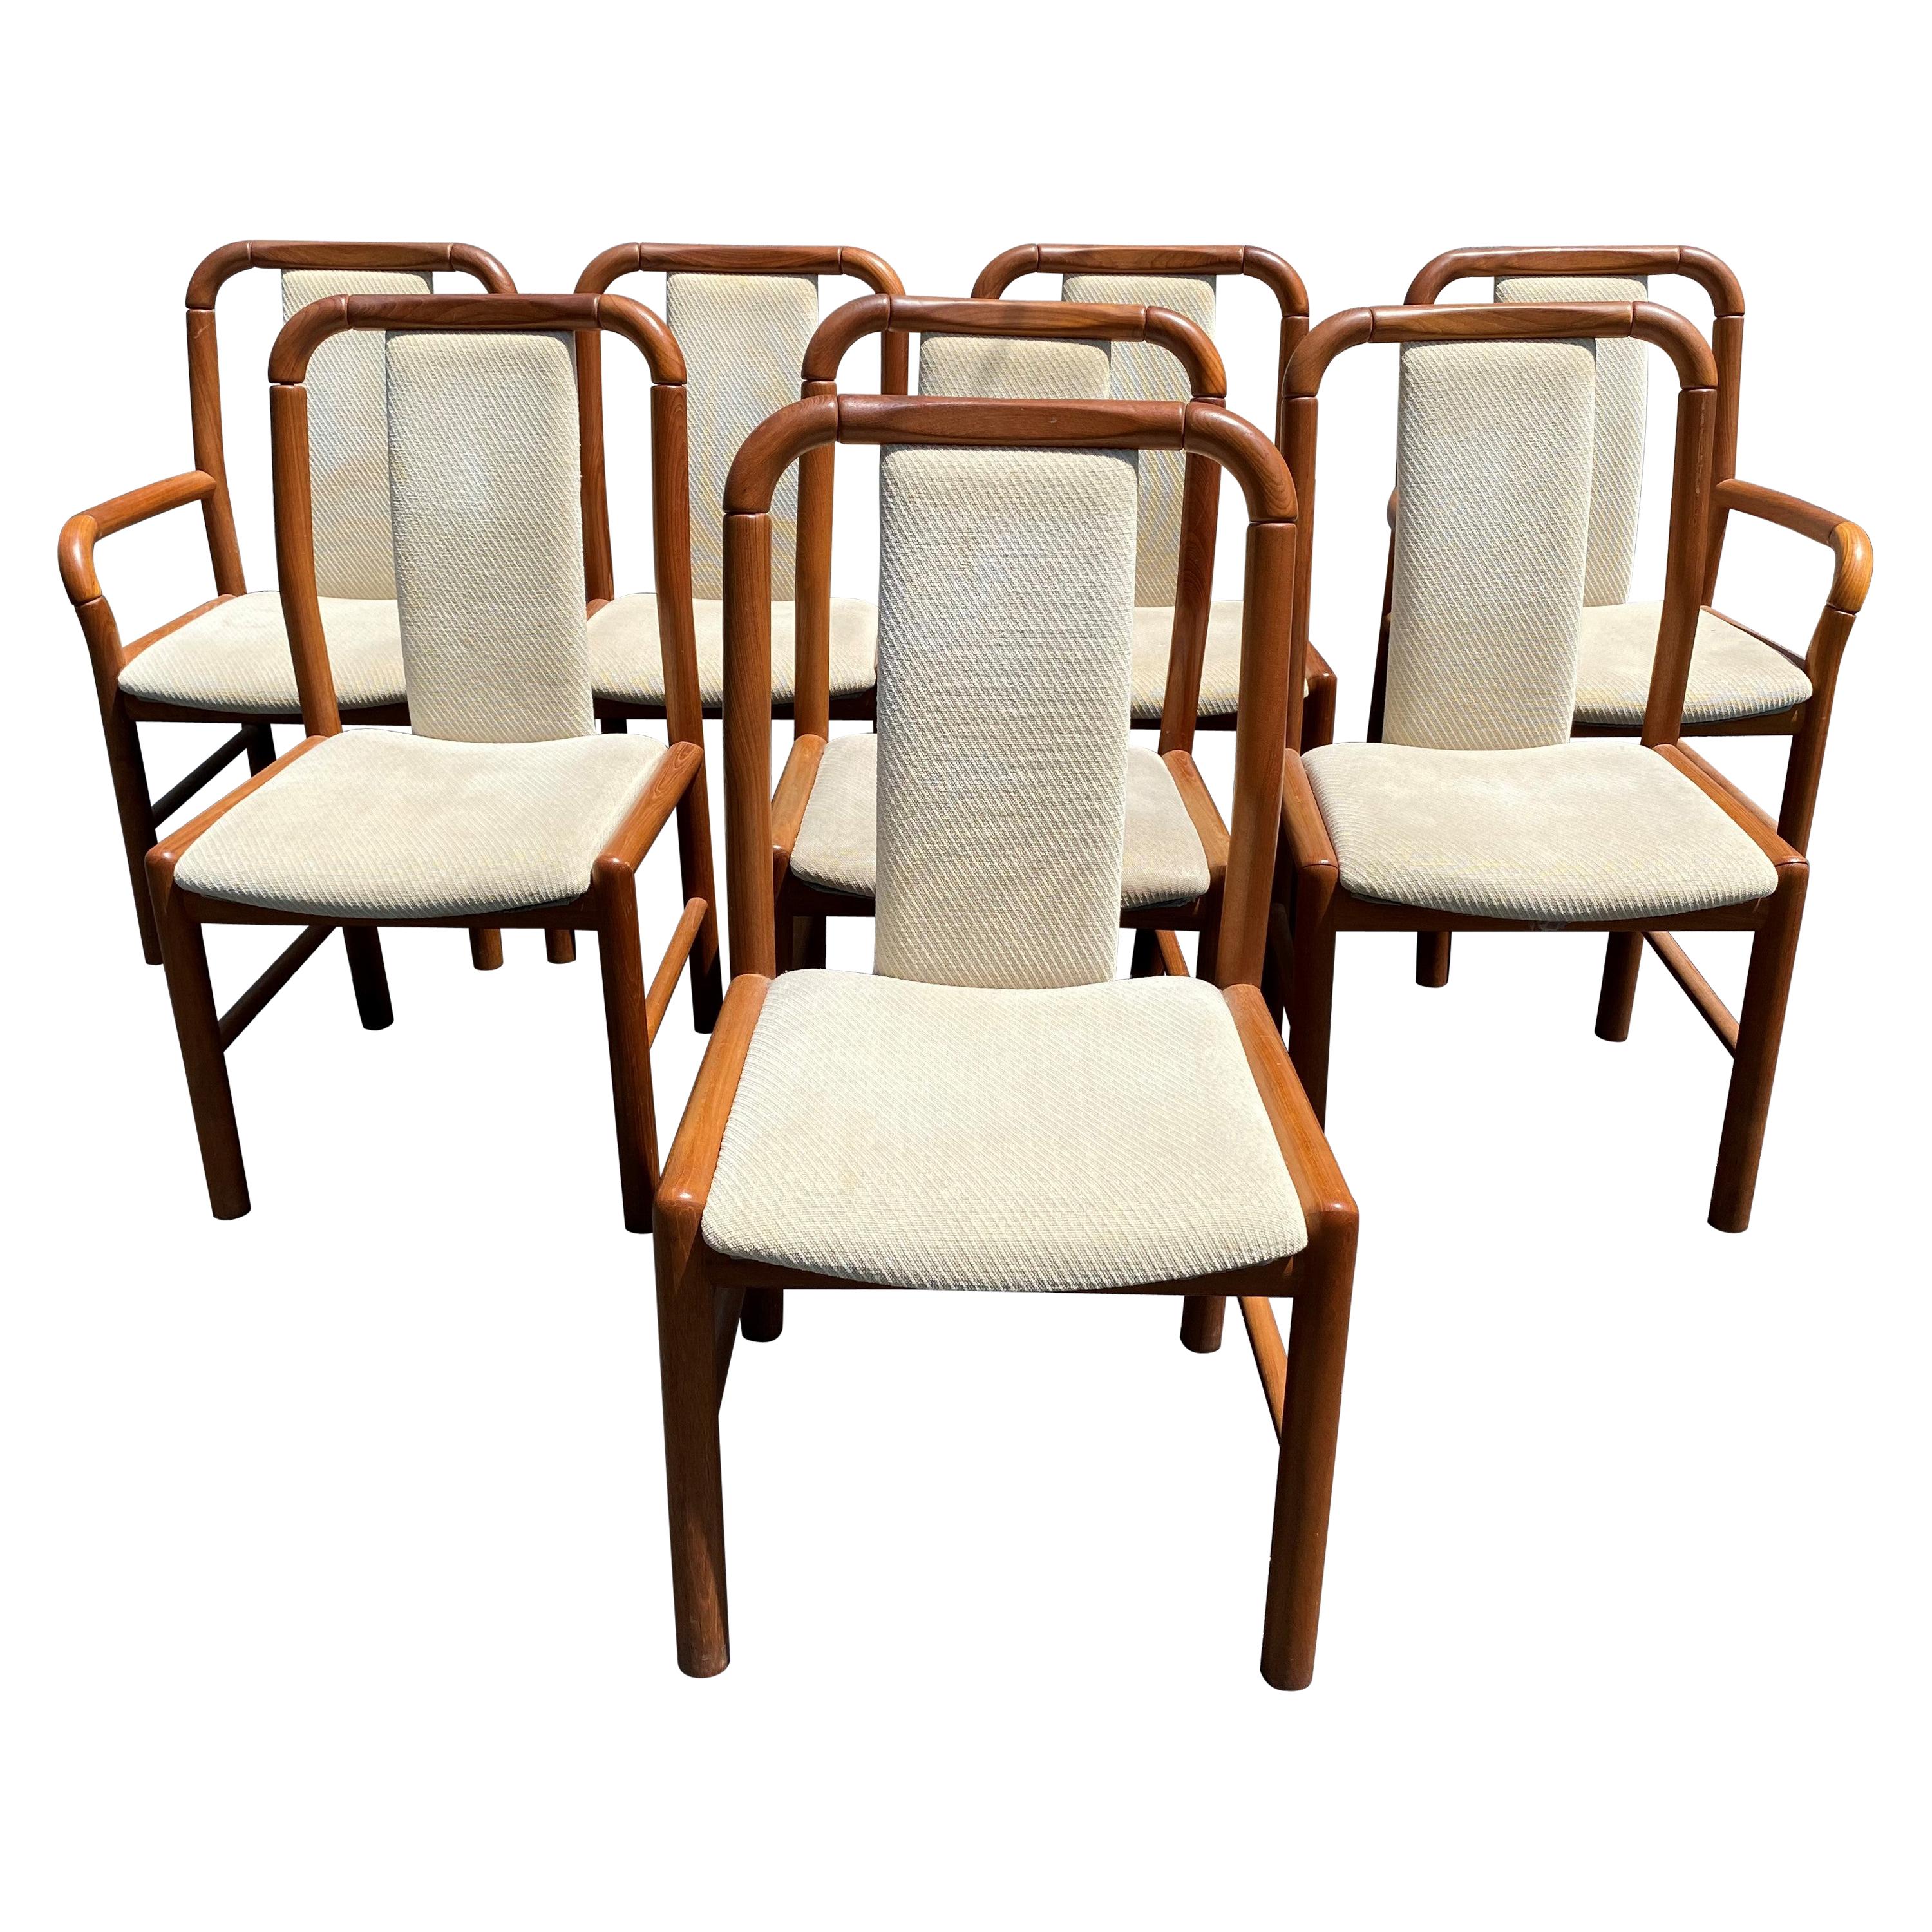 Set of 8 Benny Linden Danish Modern Teak Upholstered Dining Chairs